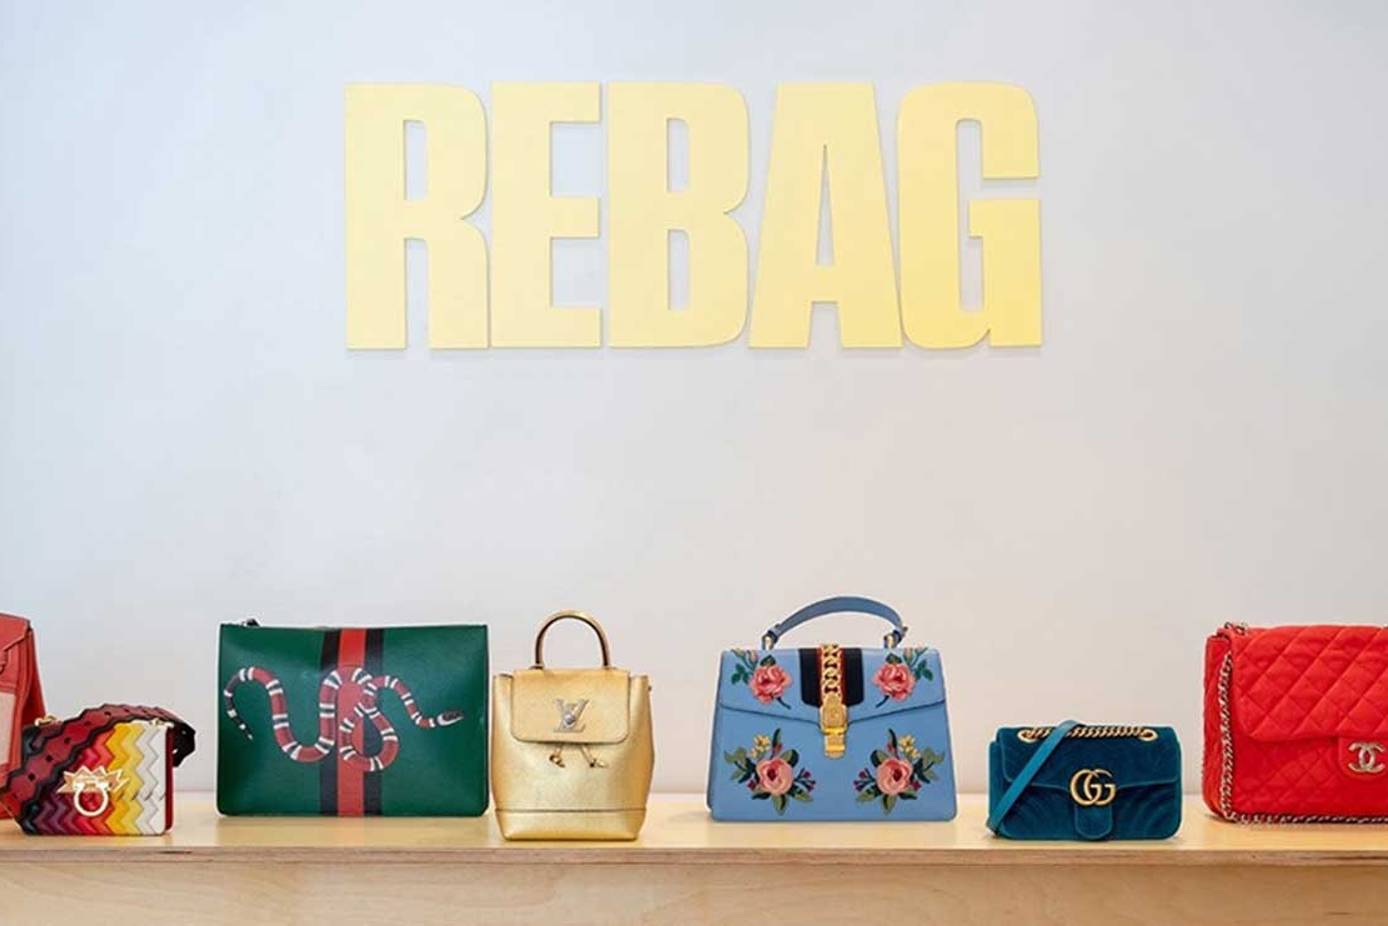 Virtual Gucci bag sold by more than 4.000 US dollars